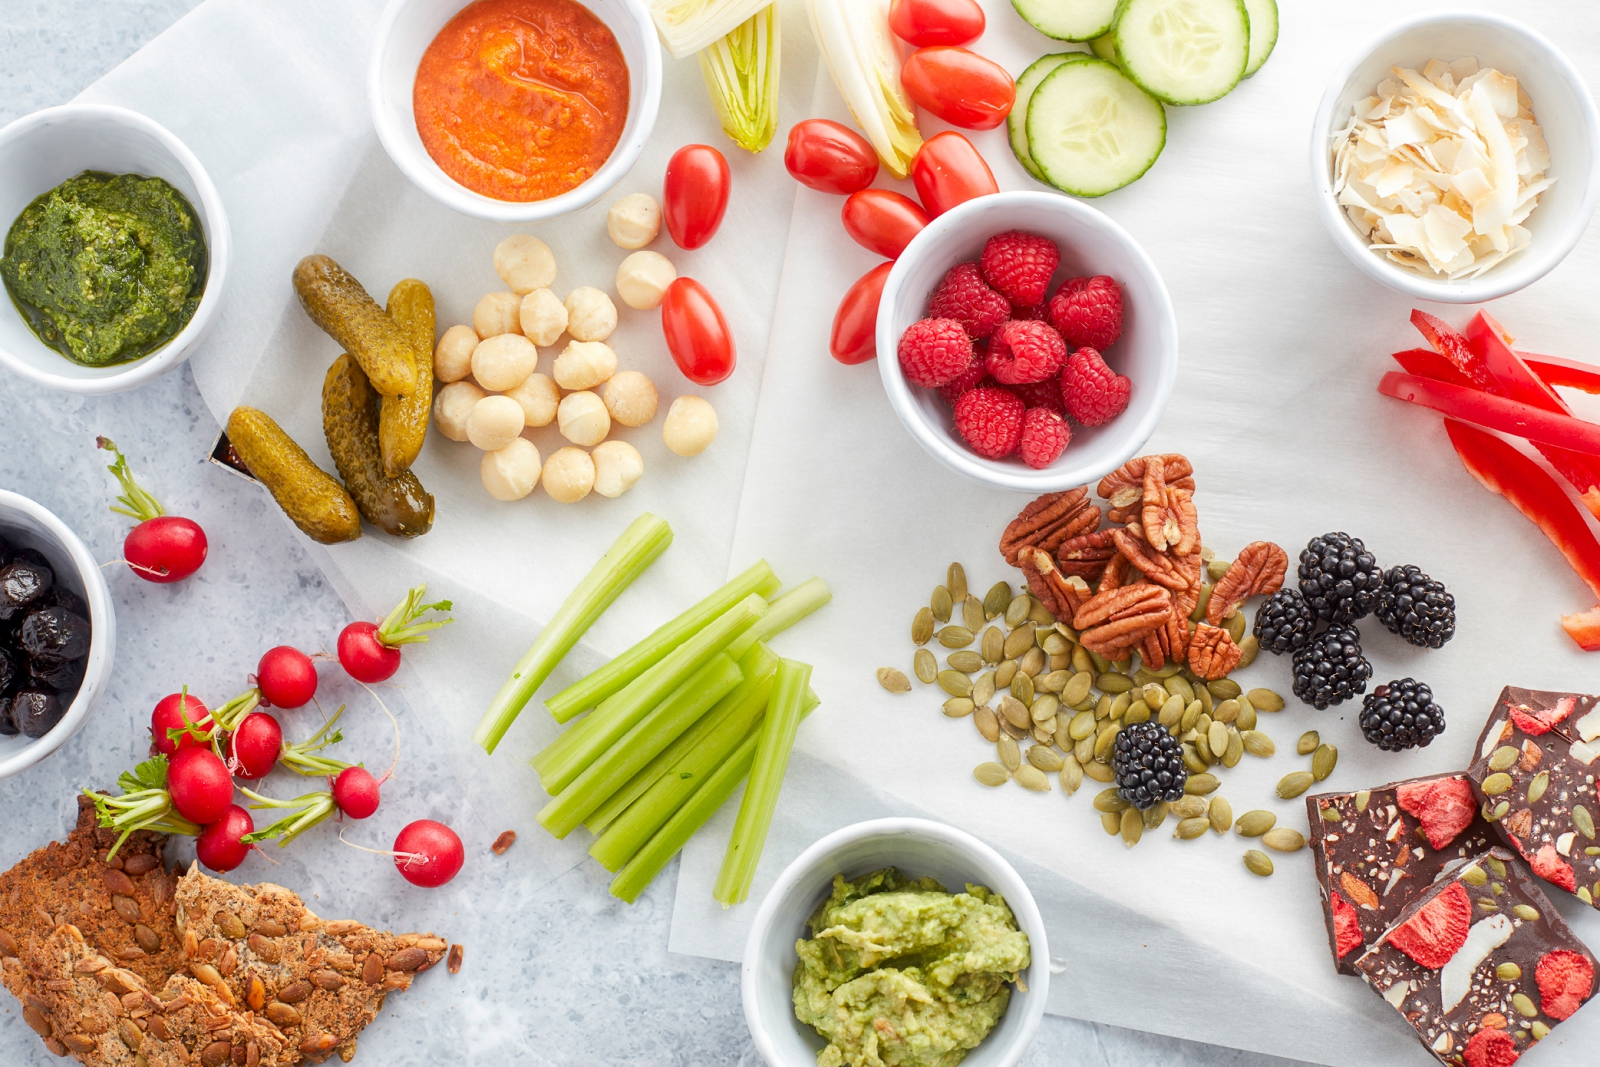 Easy vegan keto snack platter with fat-burner guacamole